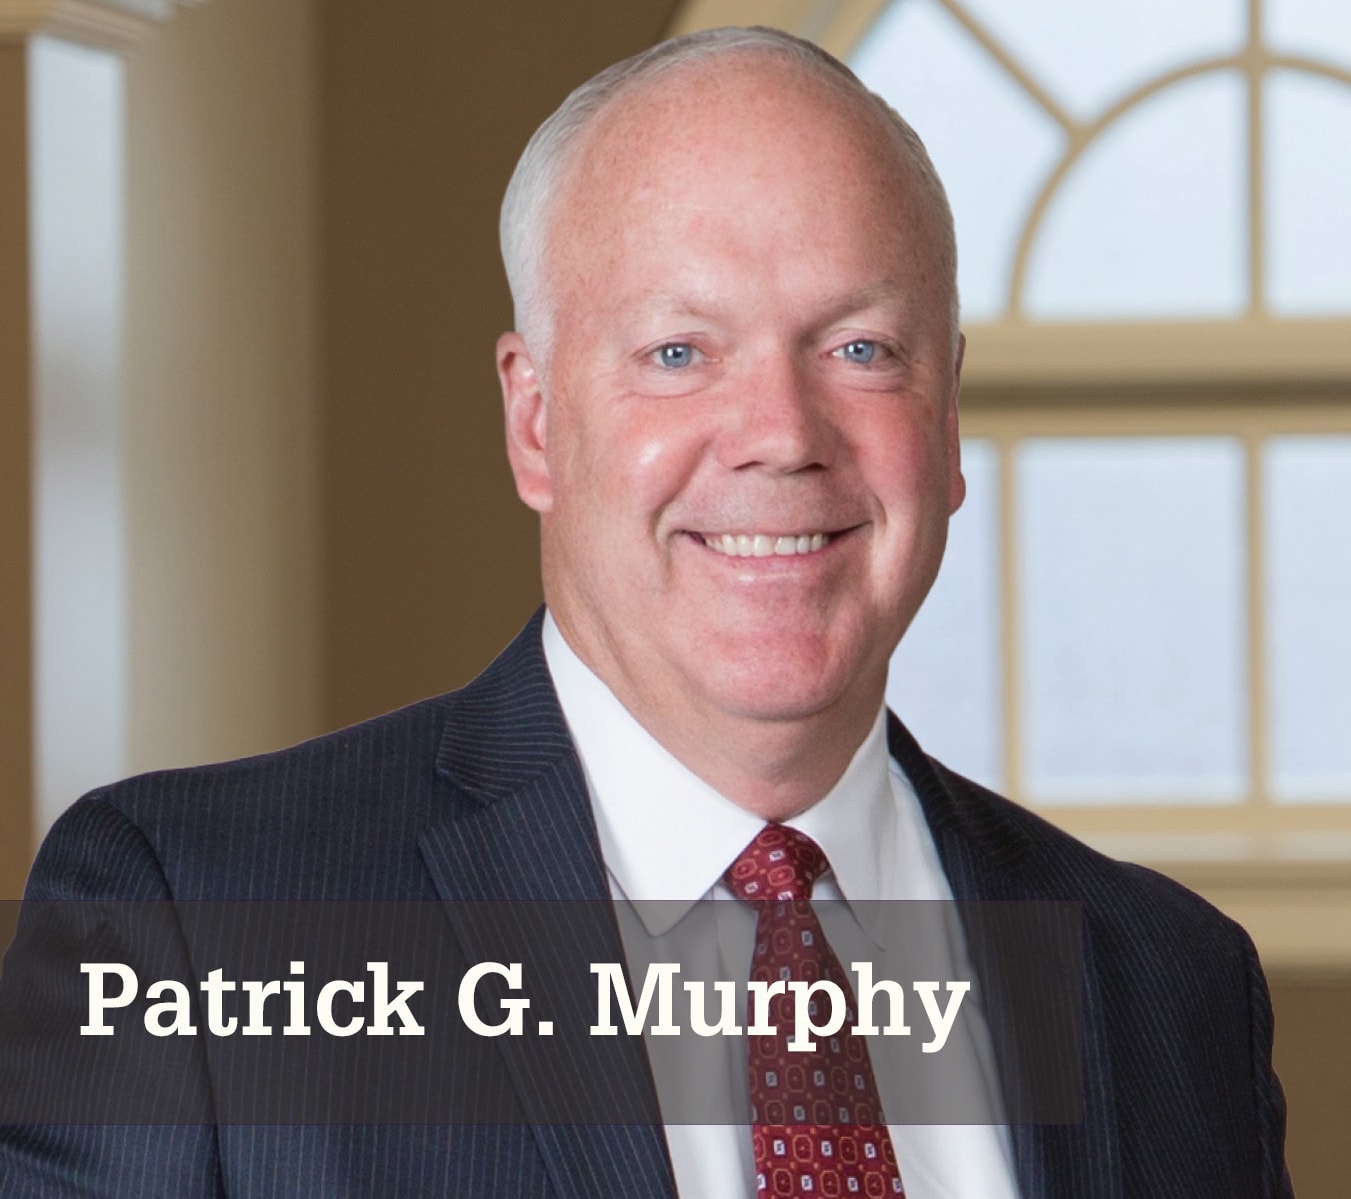 Patrick G. Murphy